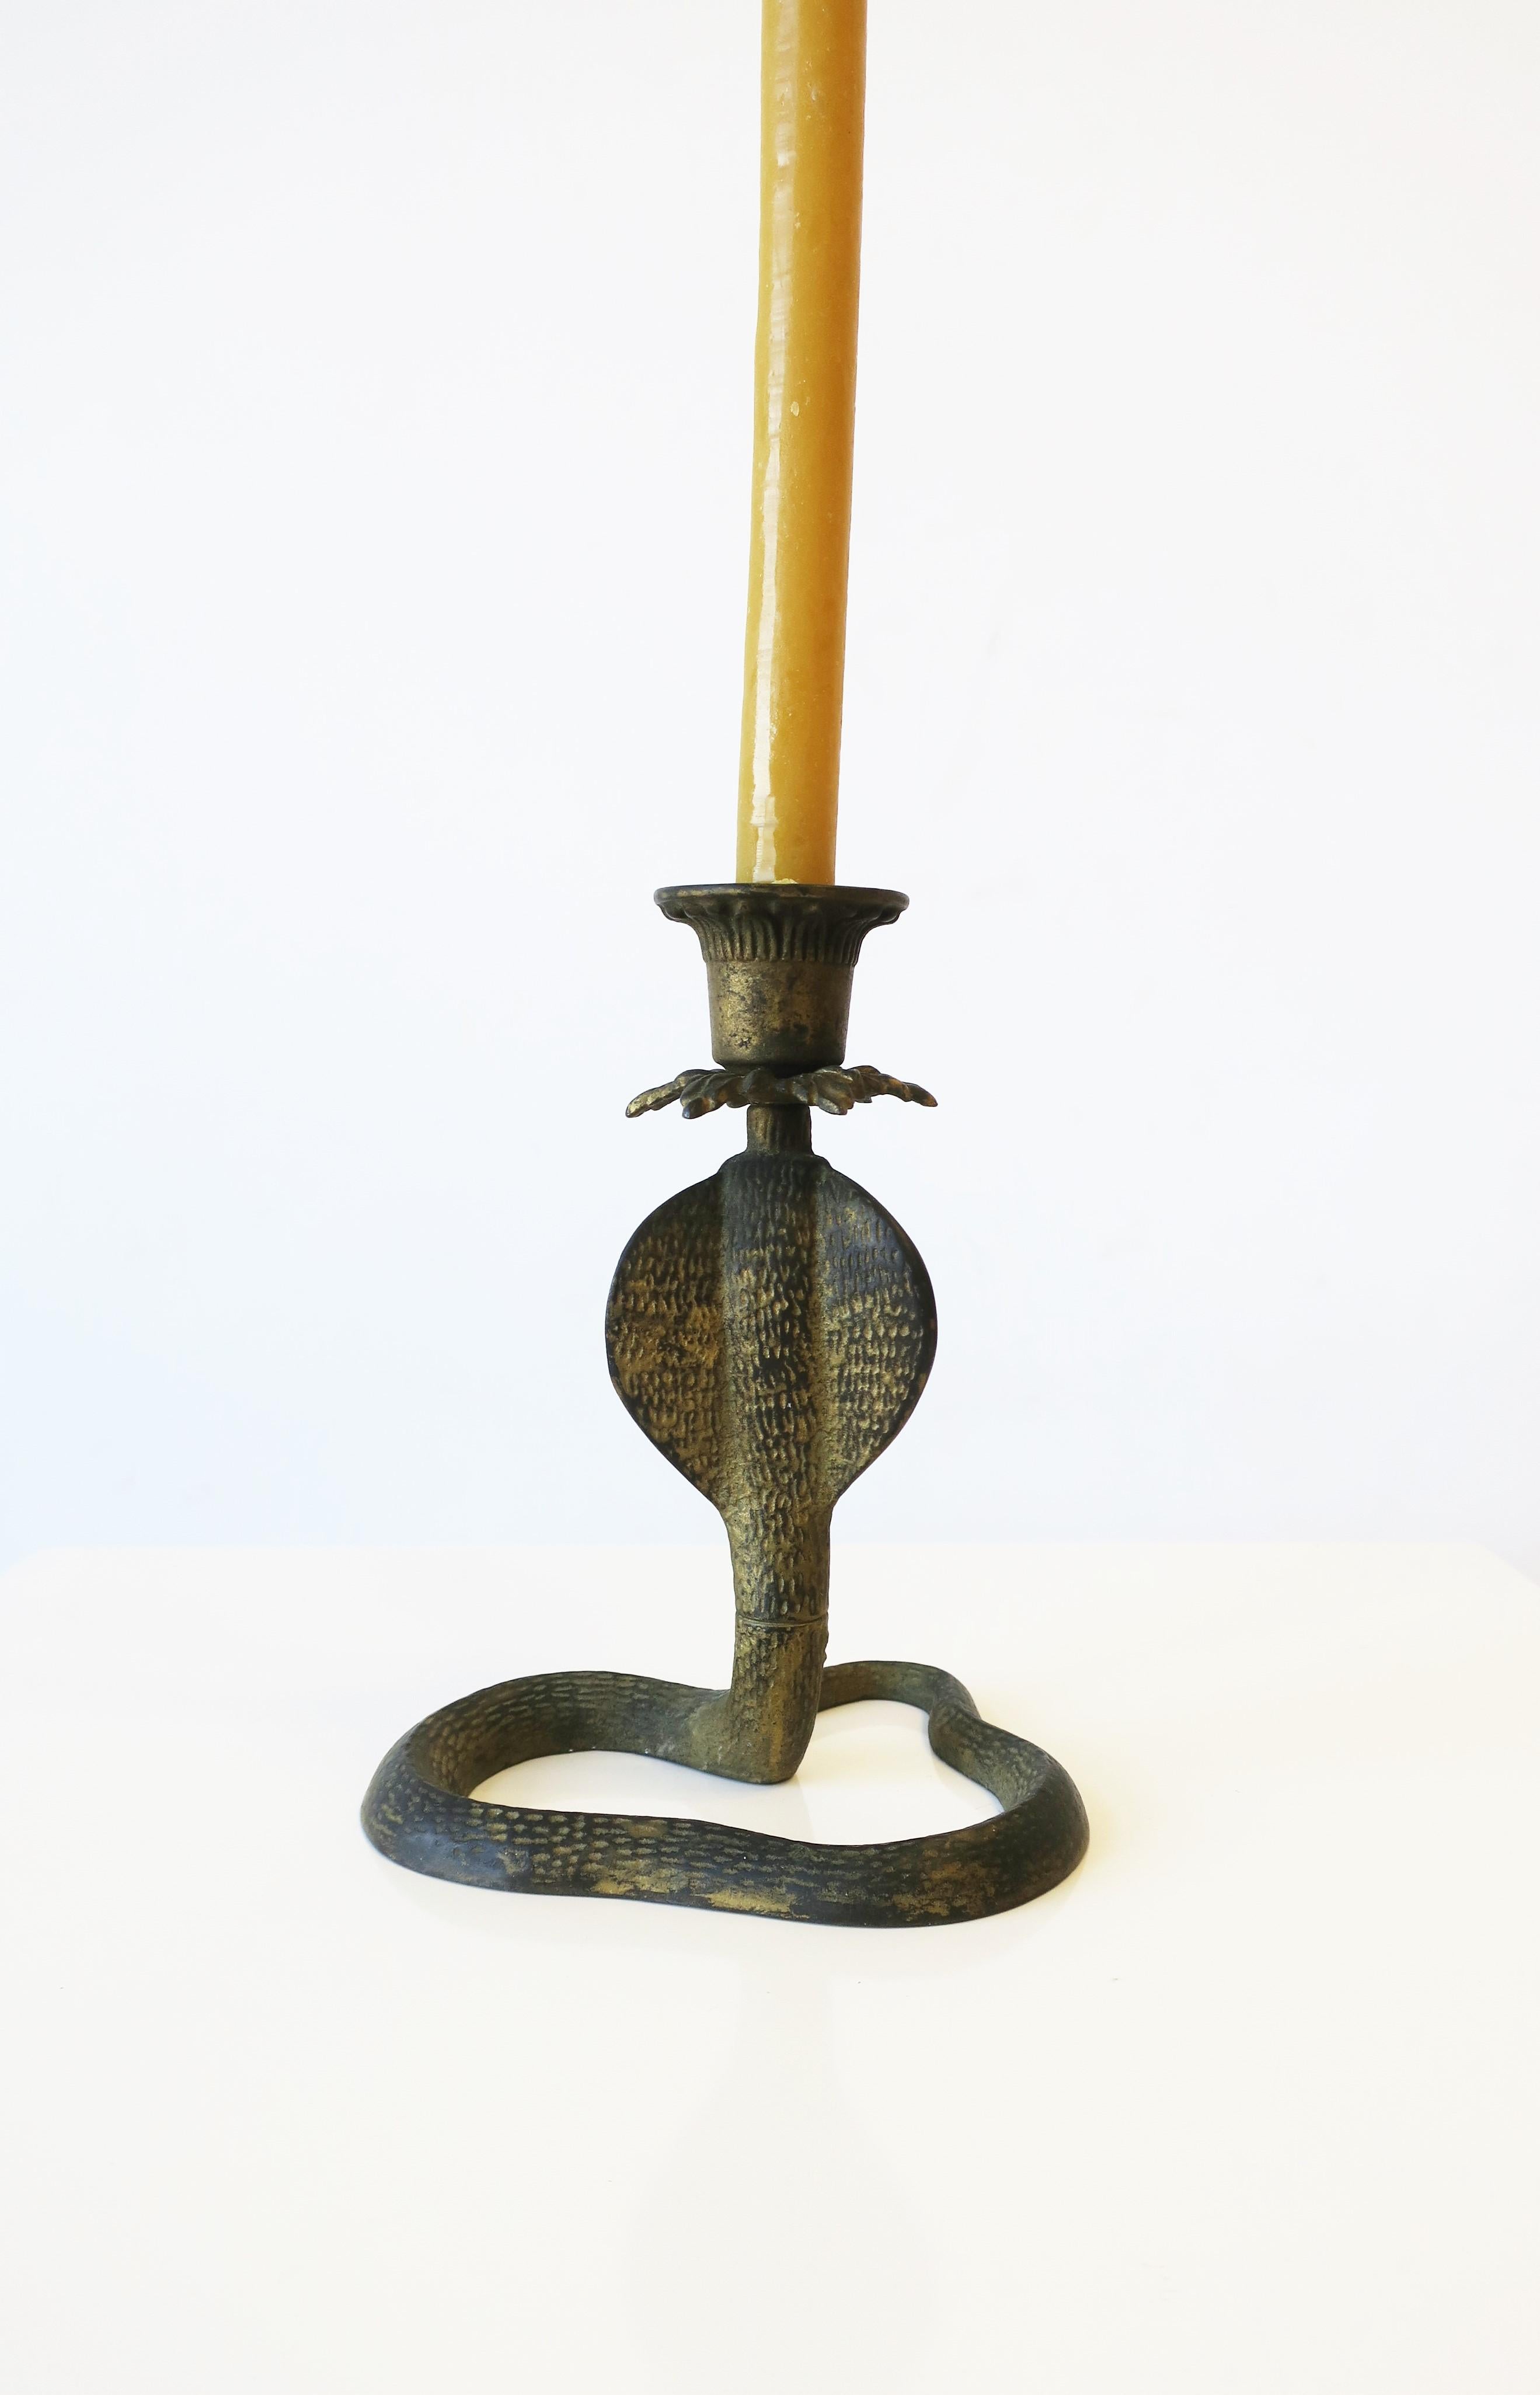 Cobra Snake Candlestick Holder in Gold Gilt For Sale 6